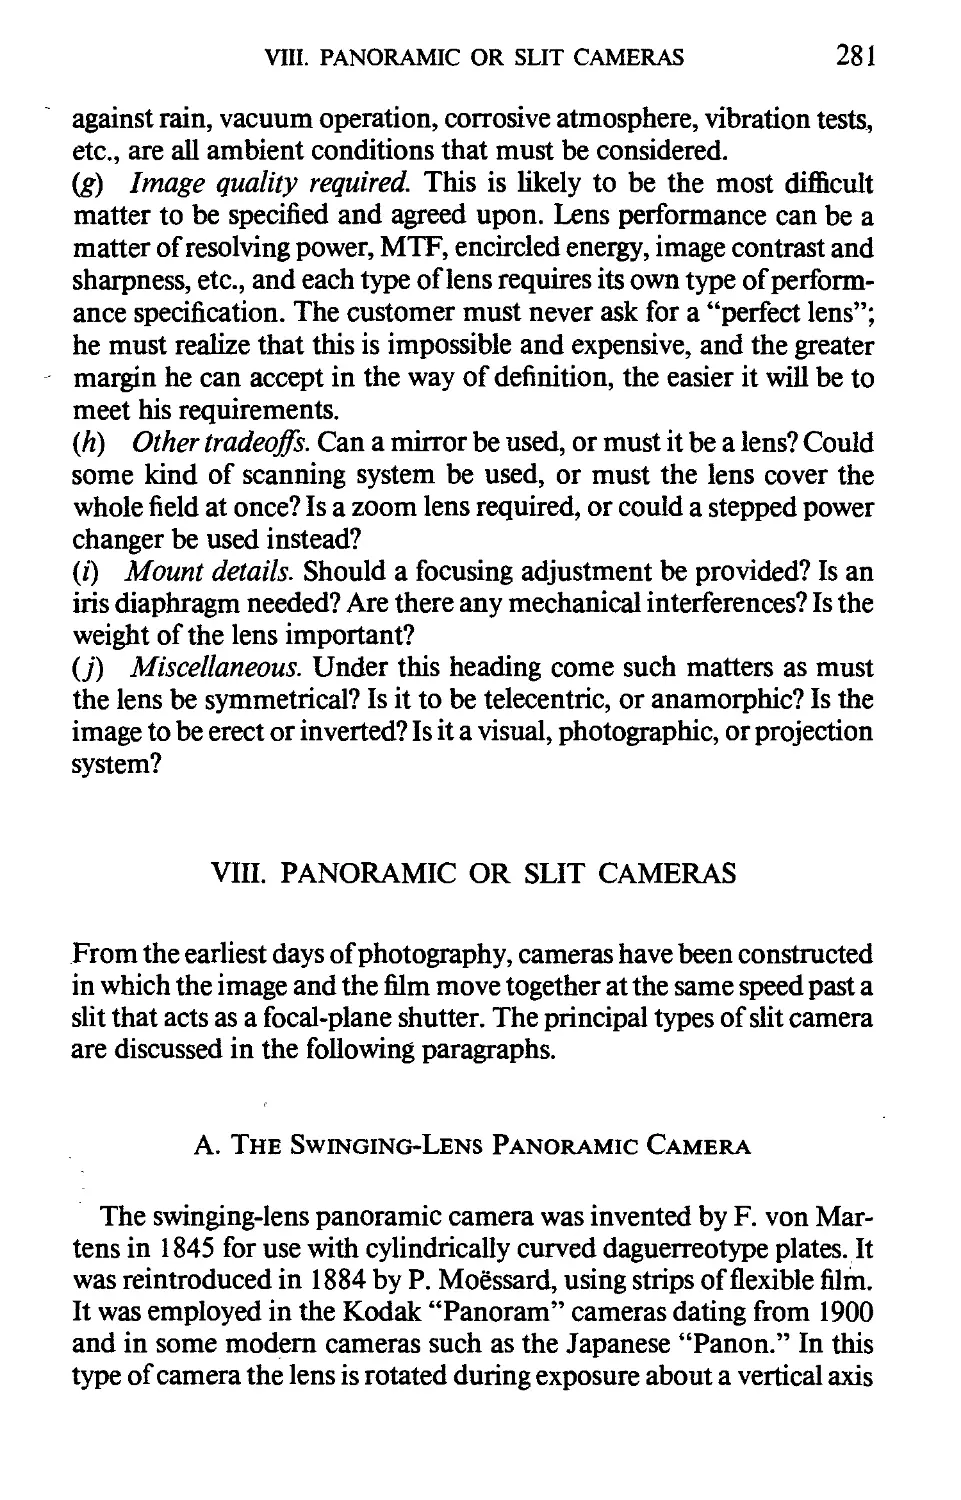 VIII. Panoramic Or Slit Cameras